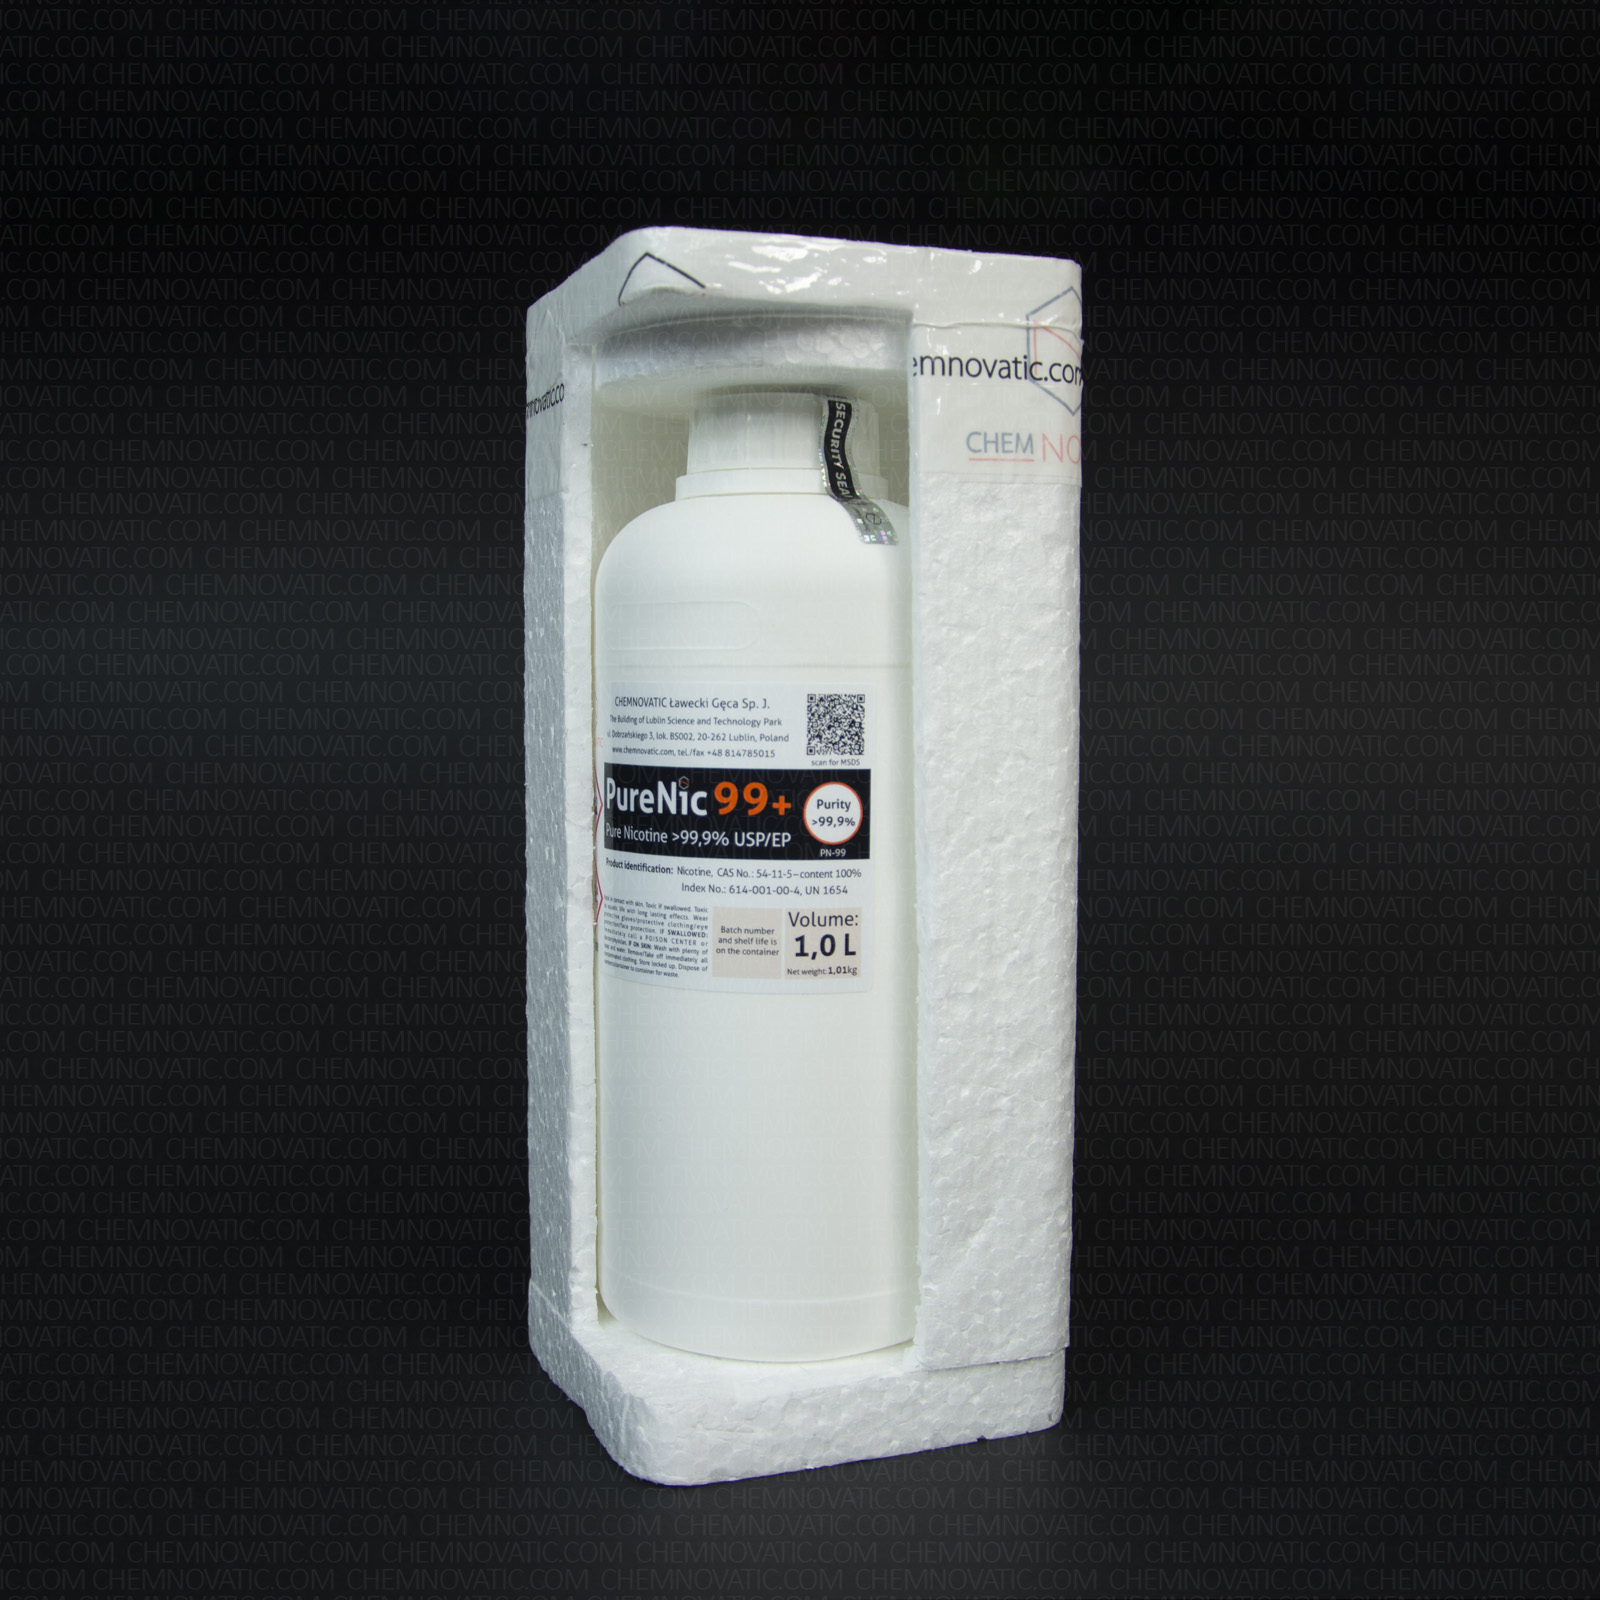 purenic 99+ pure nicotine liquid in a styrofoam packaging